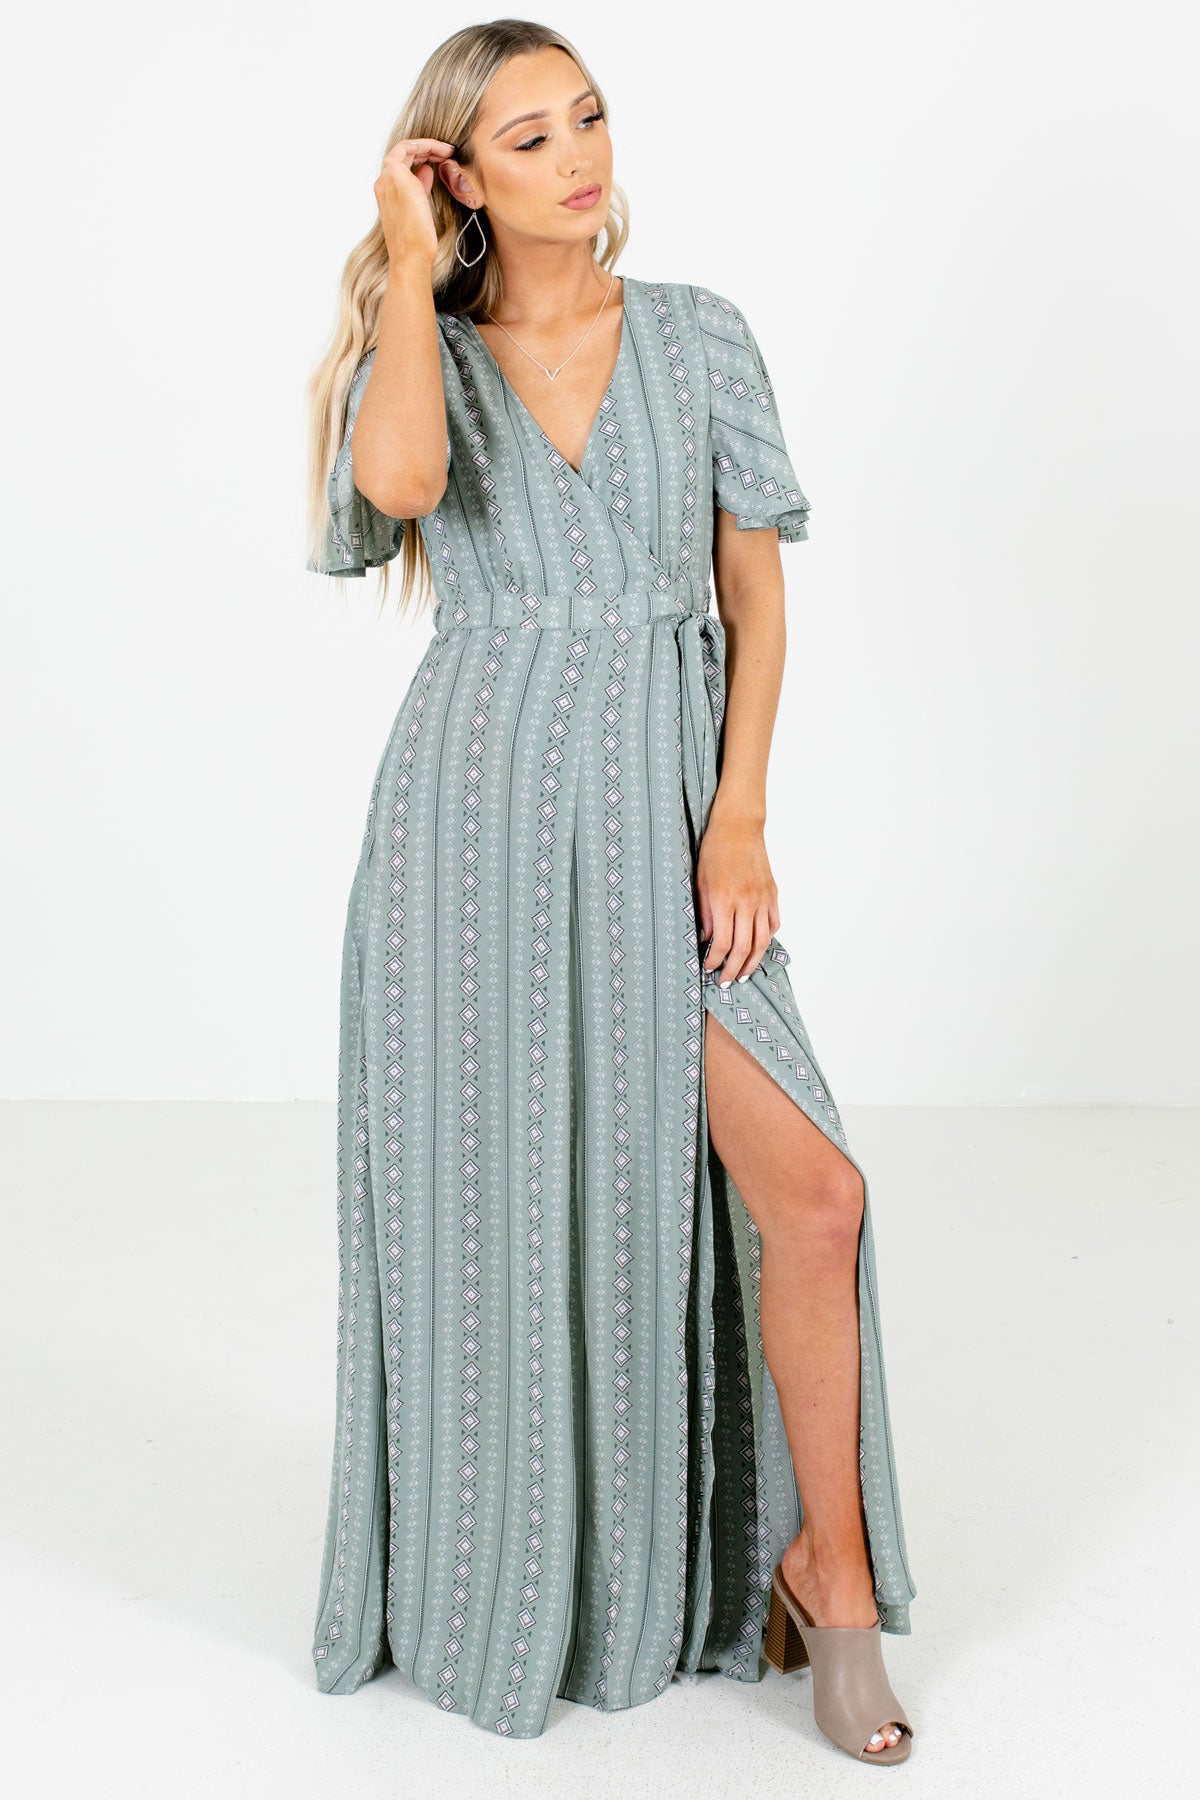 Why Wait Patterned Maxi Dress | Boutique Maxi Dresses for Women - Bella ...